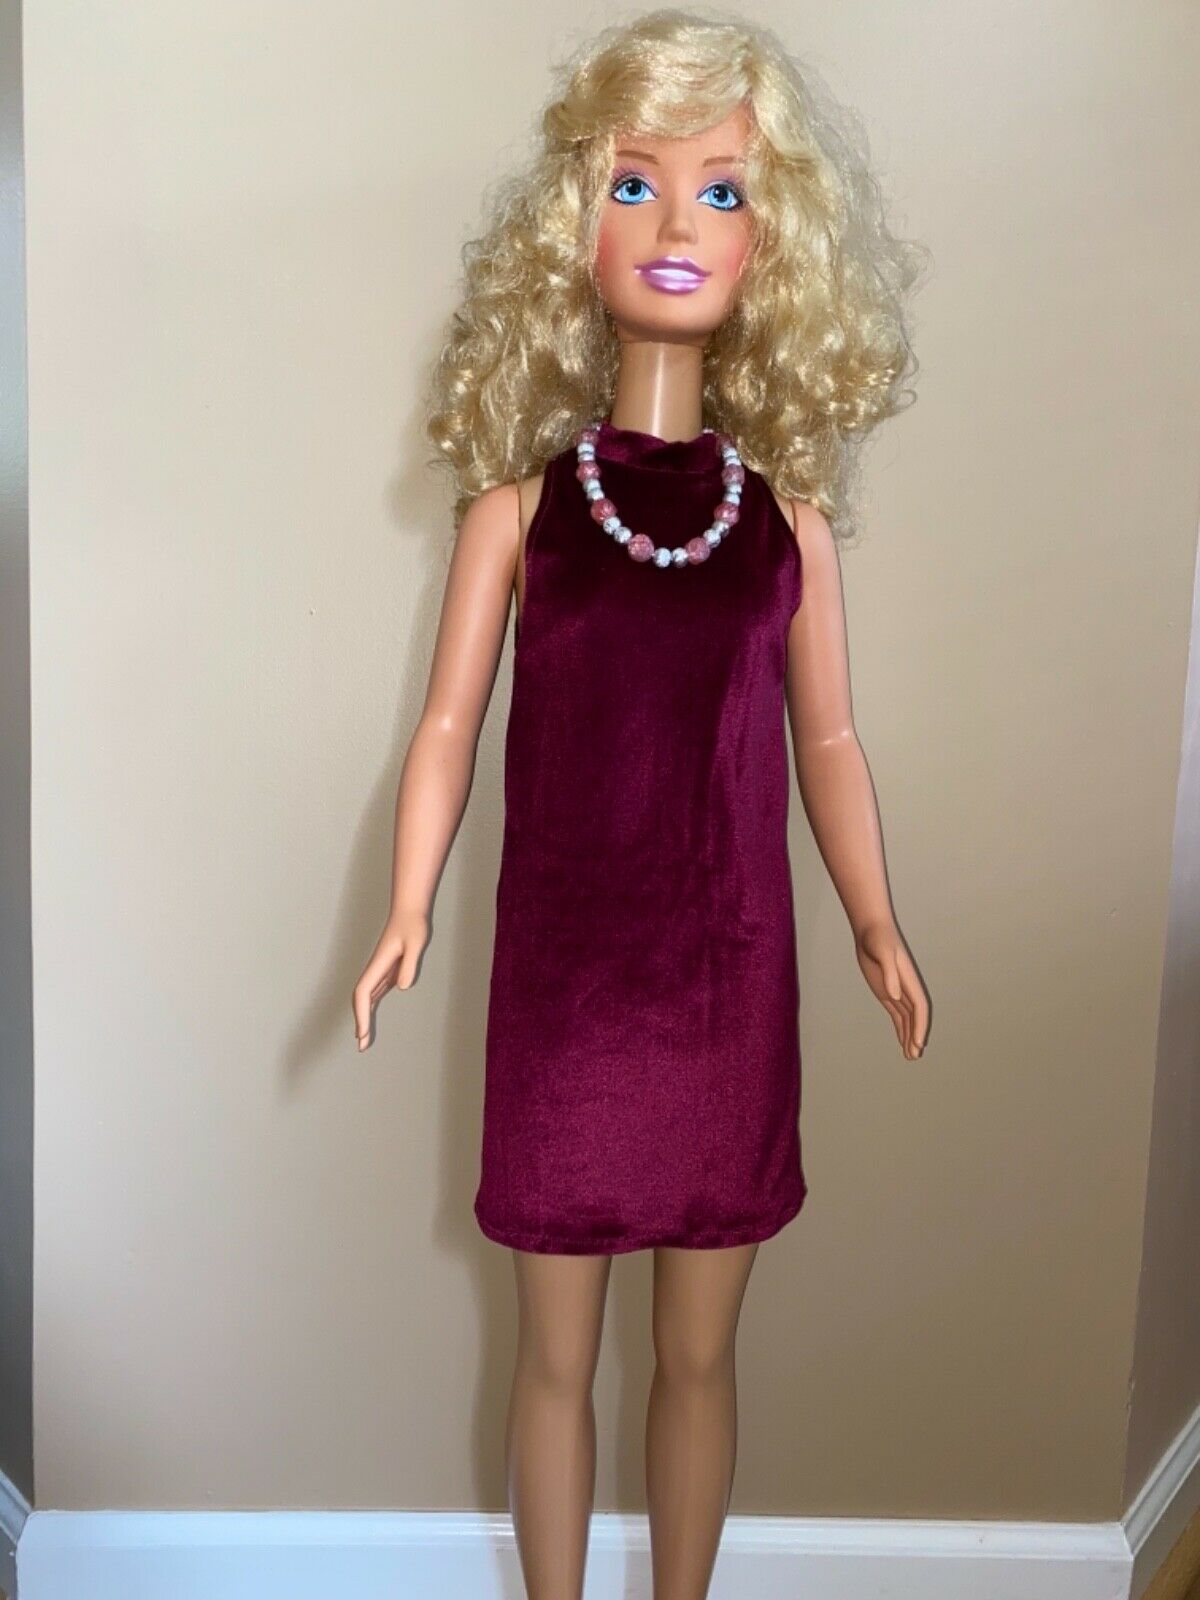 My Size Barbie Clothes -36 Inch- Burgundy Soft Velour Dress & Necklace